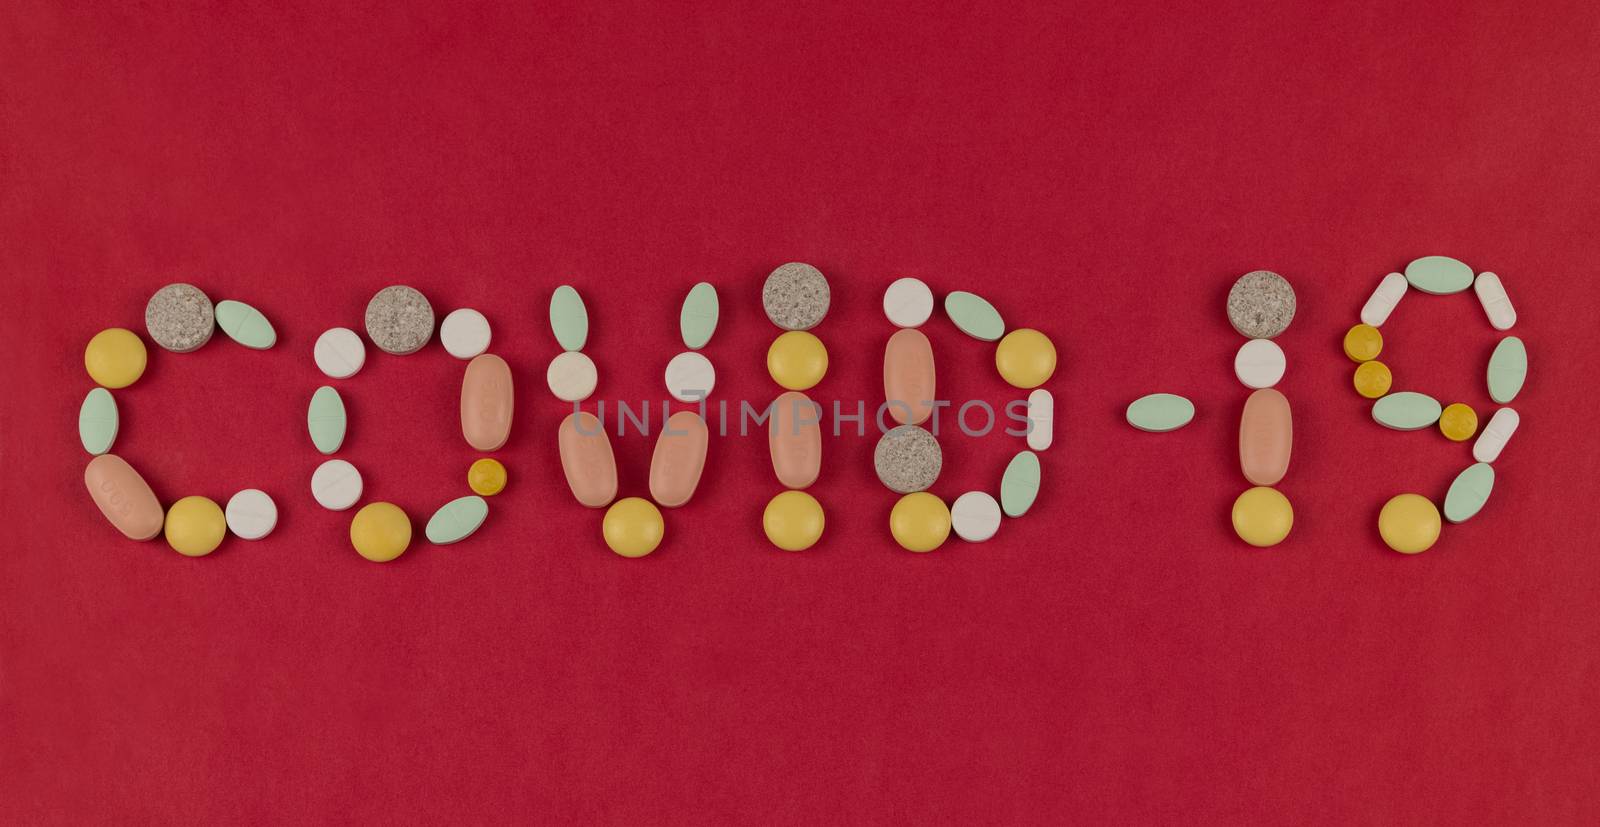 Inscription Coronavirus made from pills on a red background. Coronavirus text made of tablets. Coronavirus Protection Concept